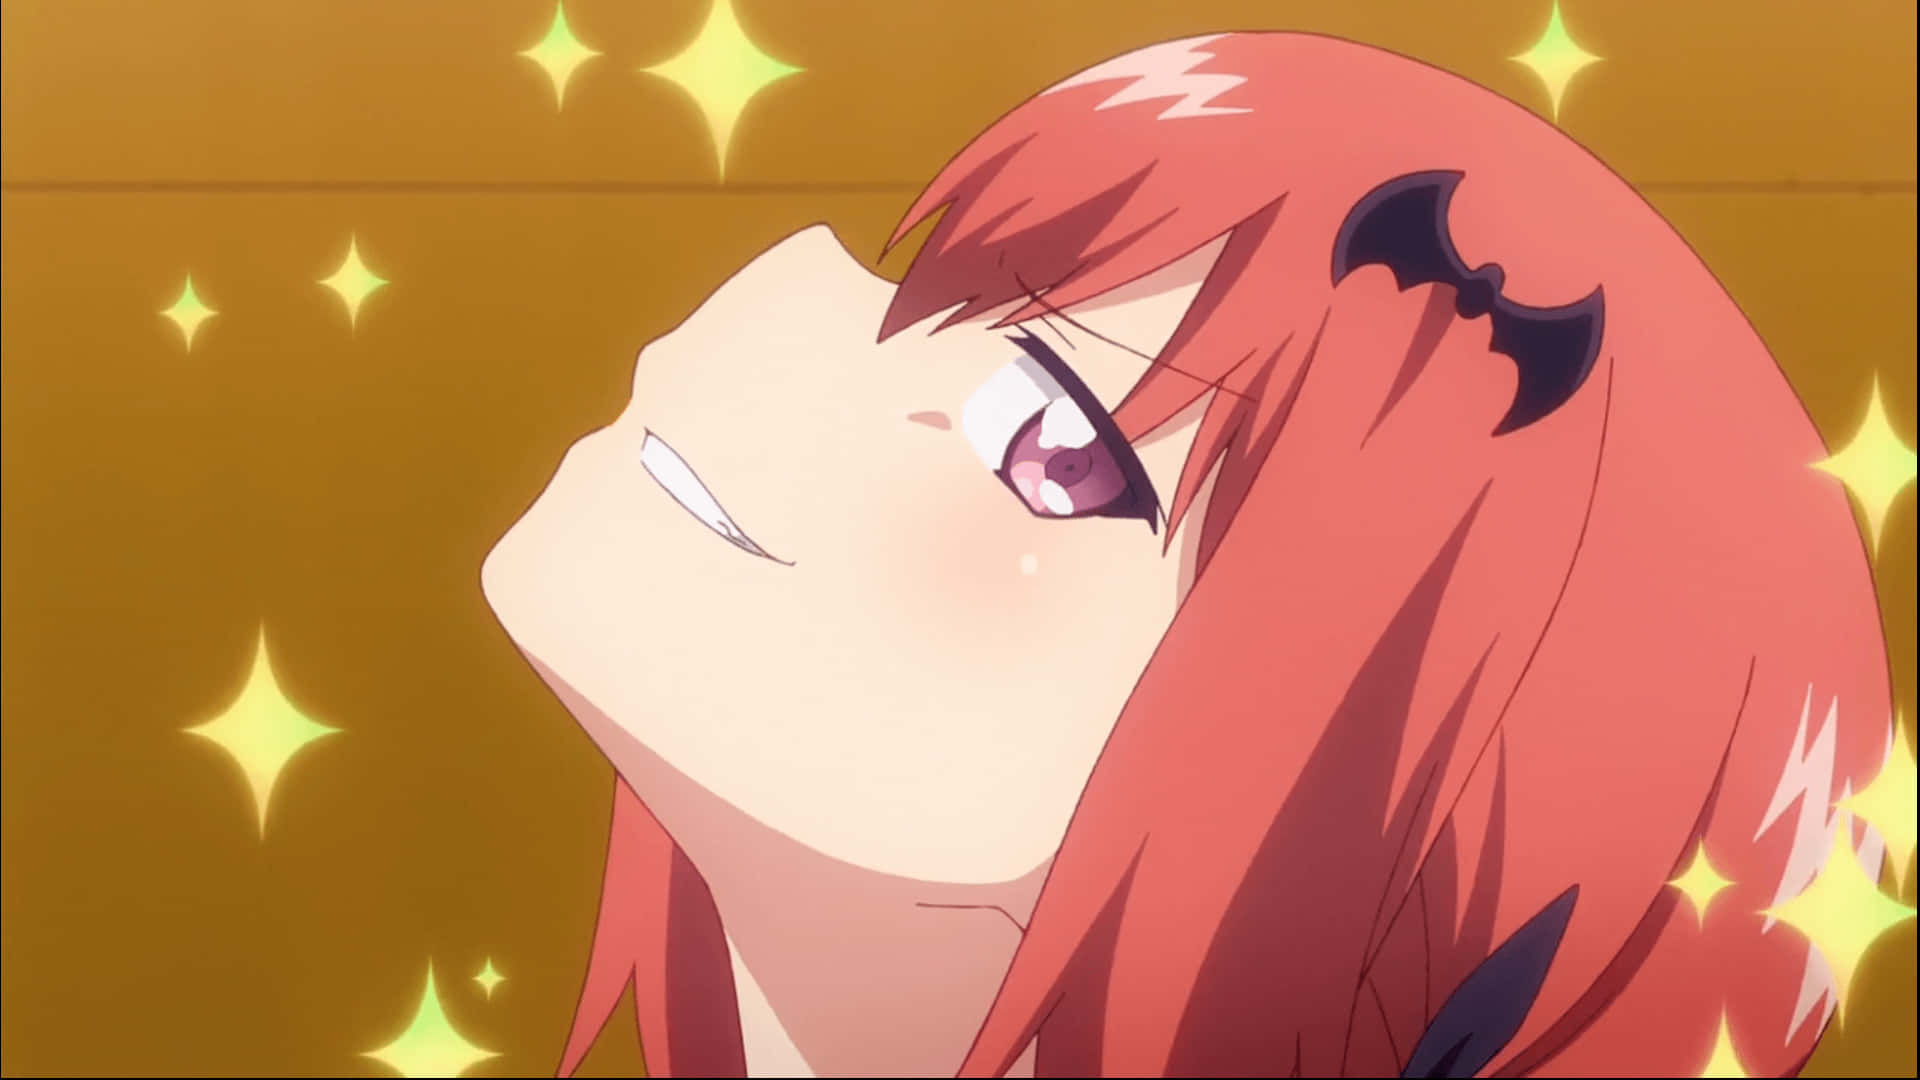 smug face of the beautiful anime t8k4387sccianszt